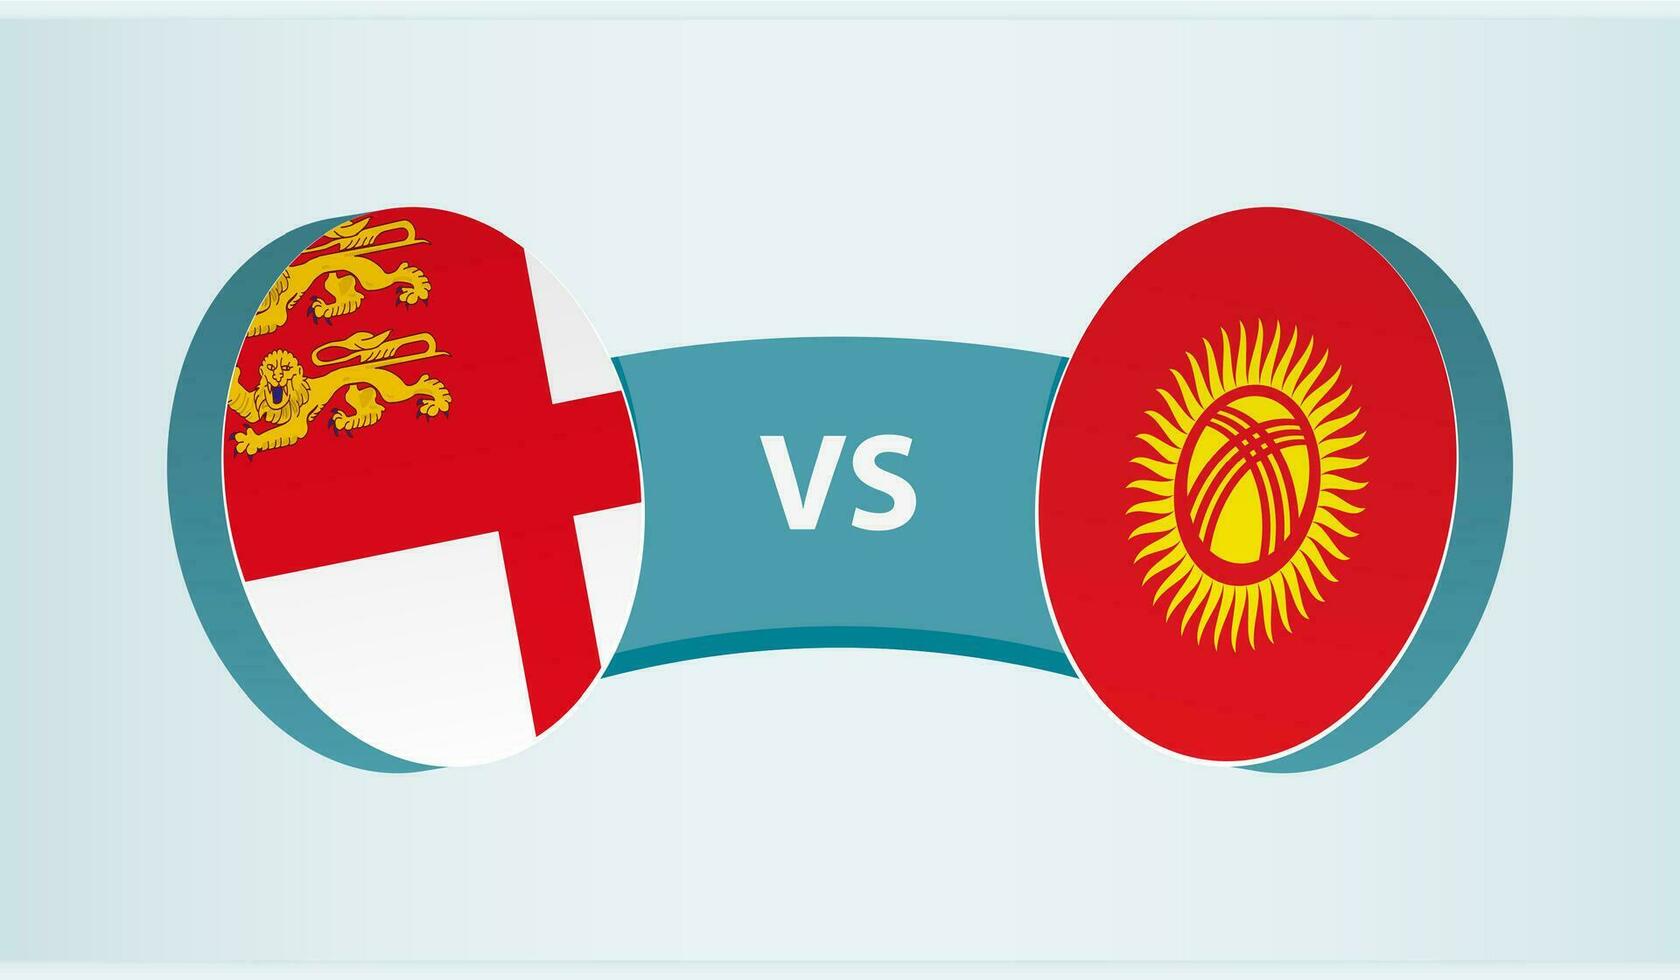 Sark versus Kyrgyzstan, team sports competition concept. vector